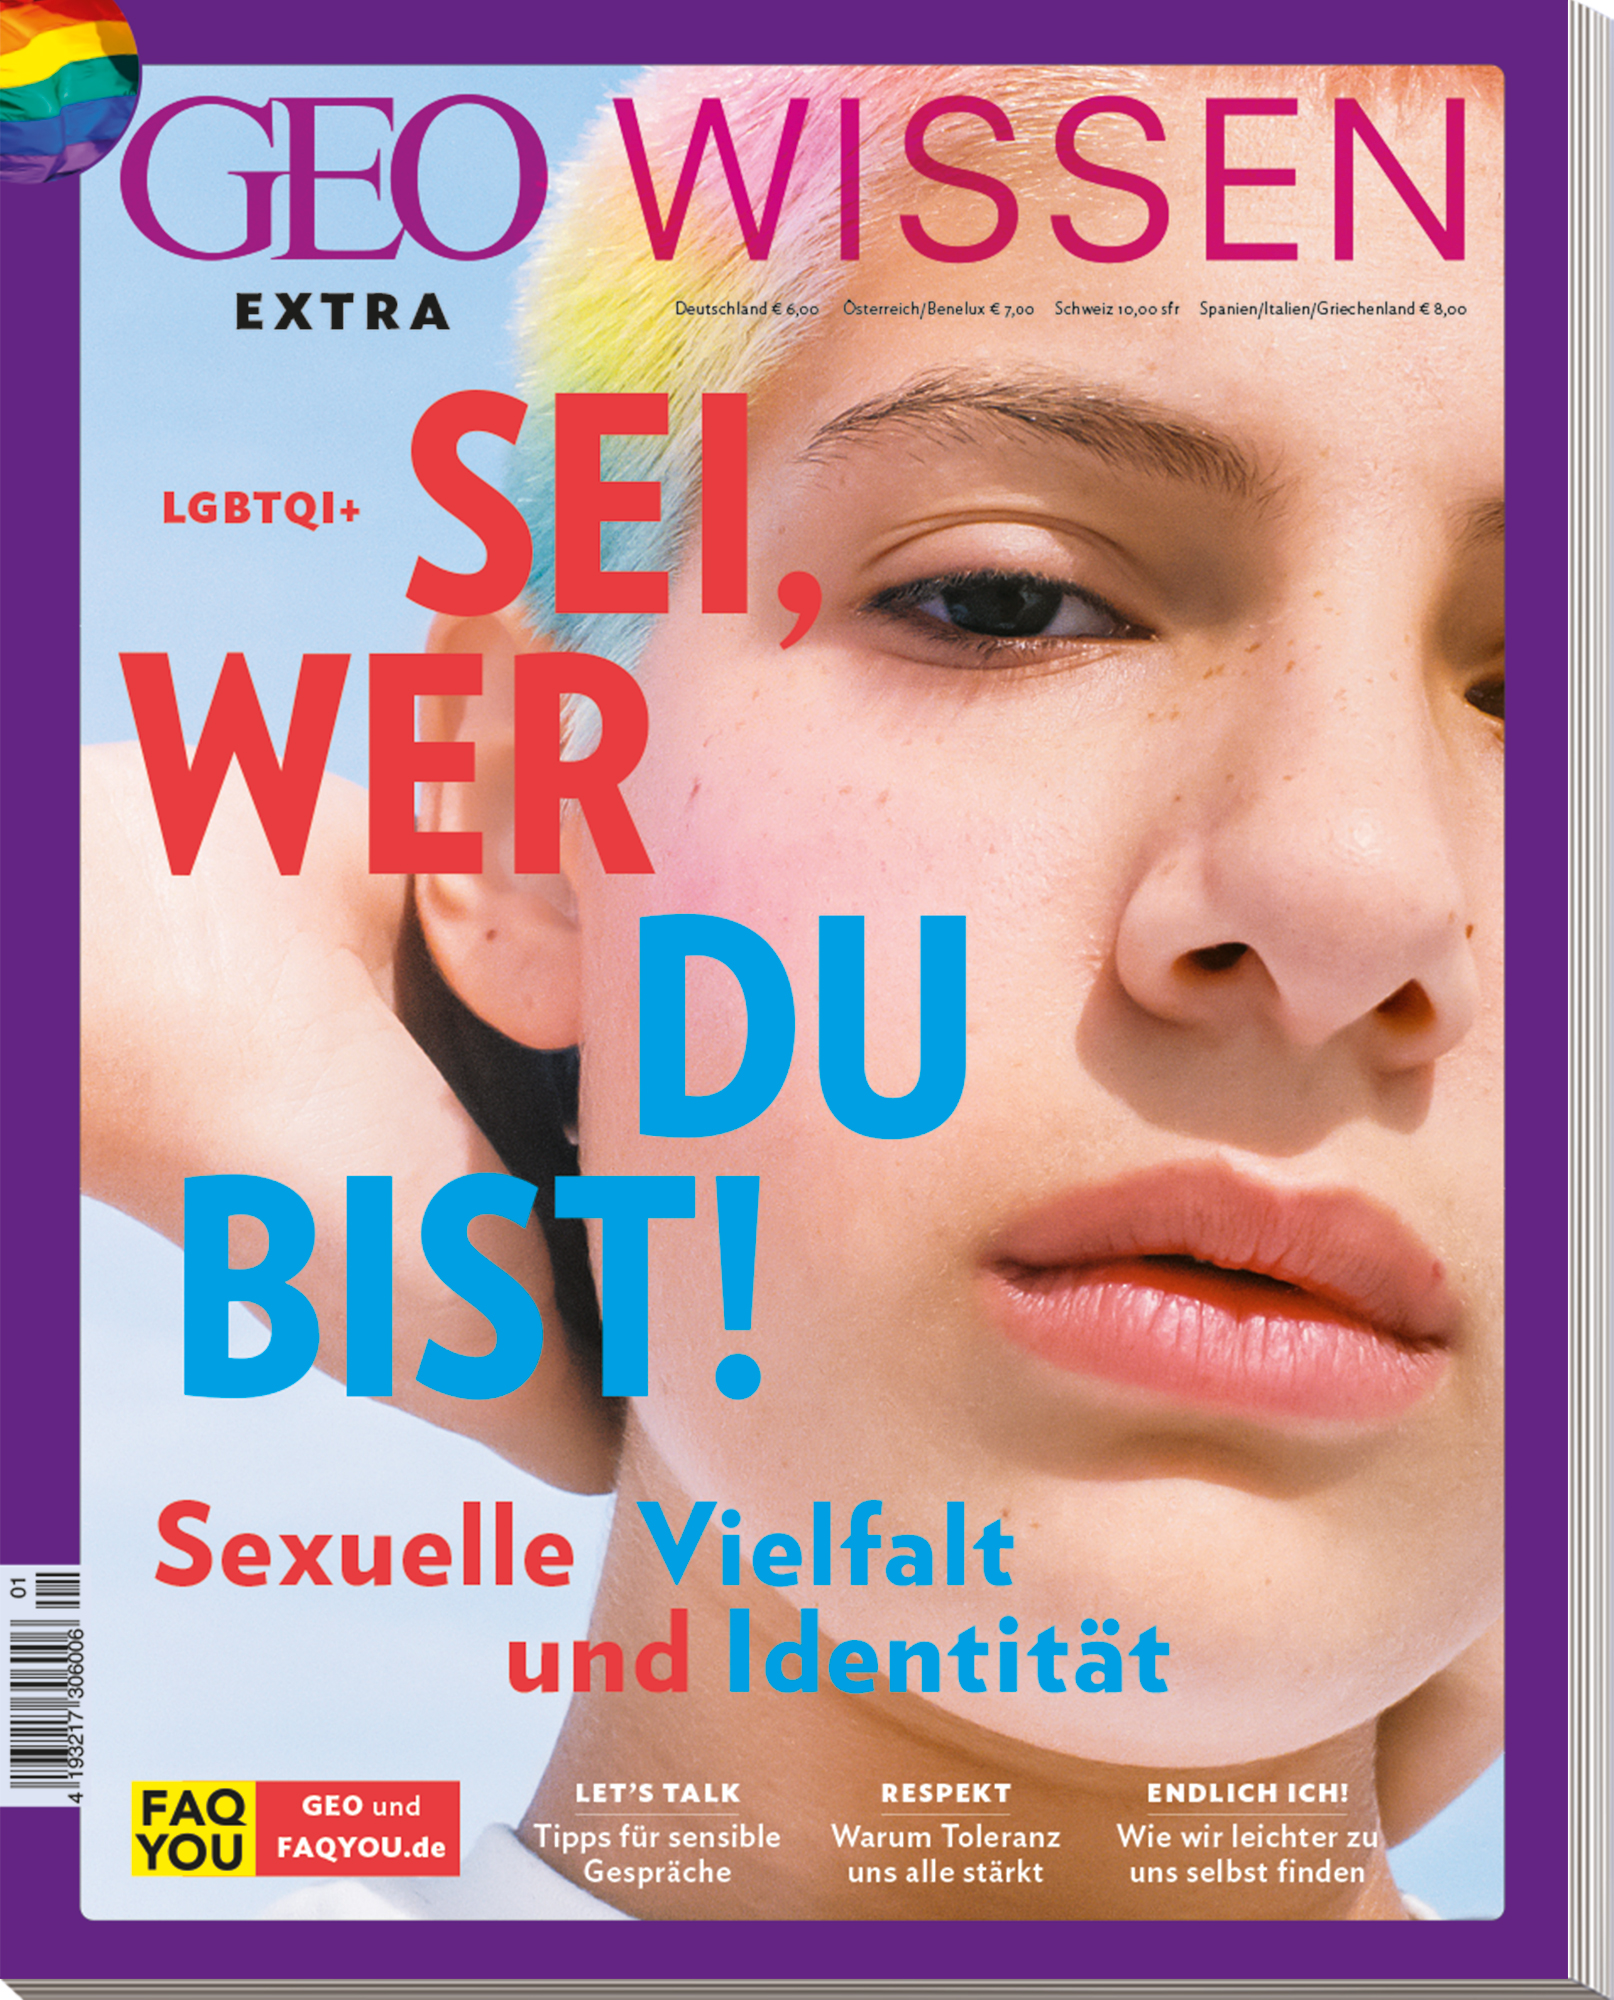 GEO WISSEN EXTRA „LGBTQI+“